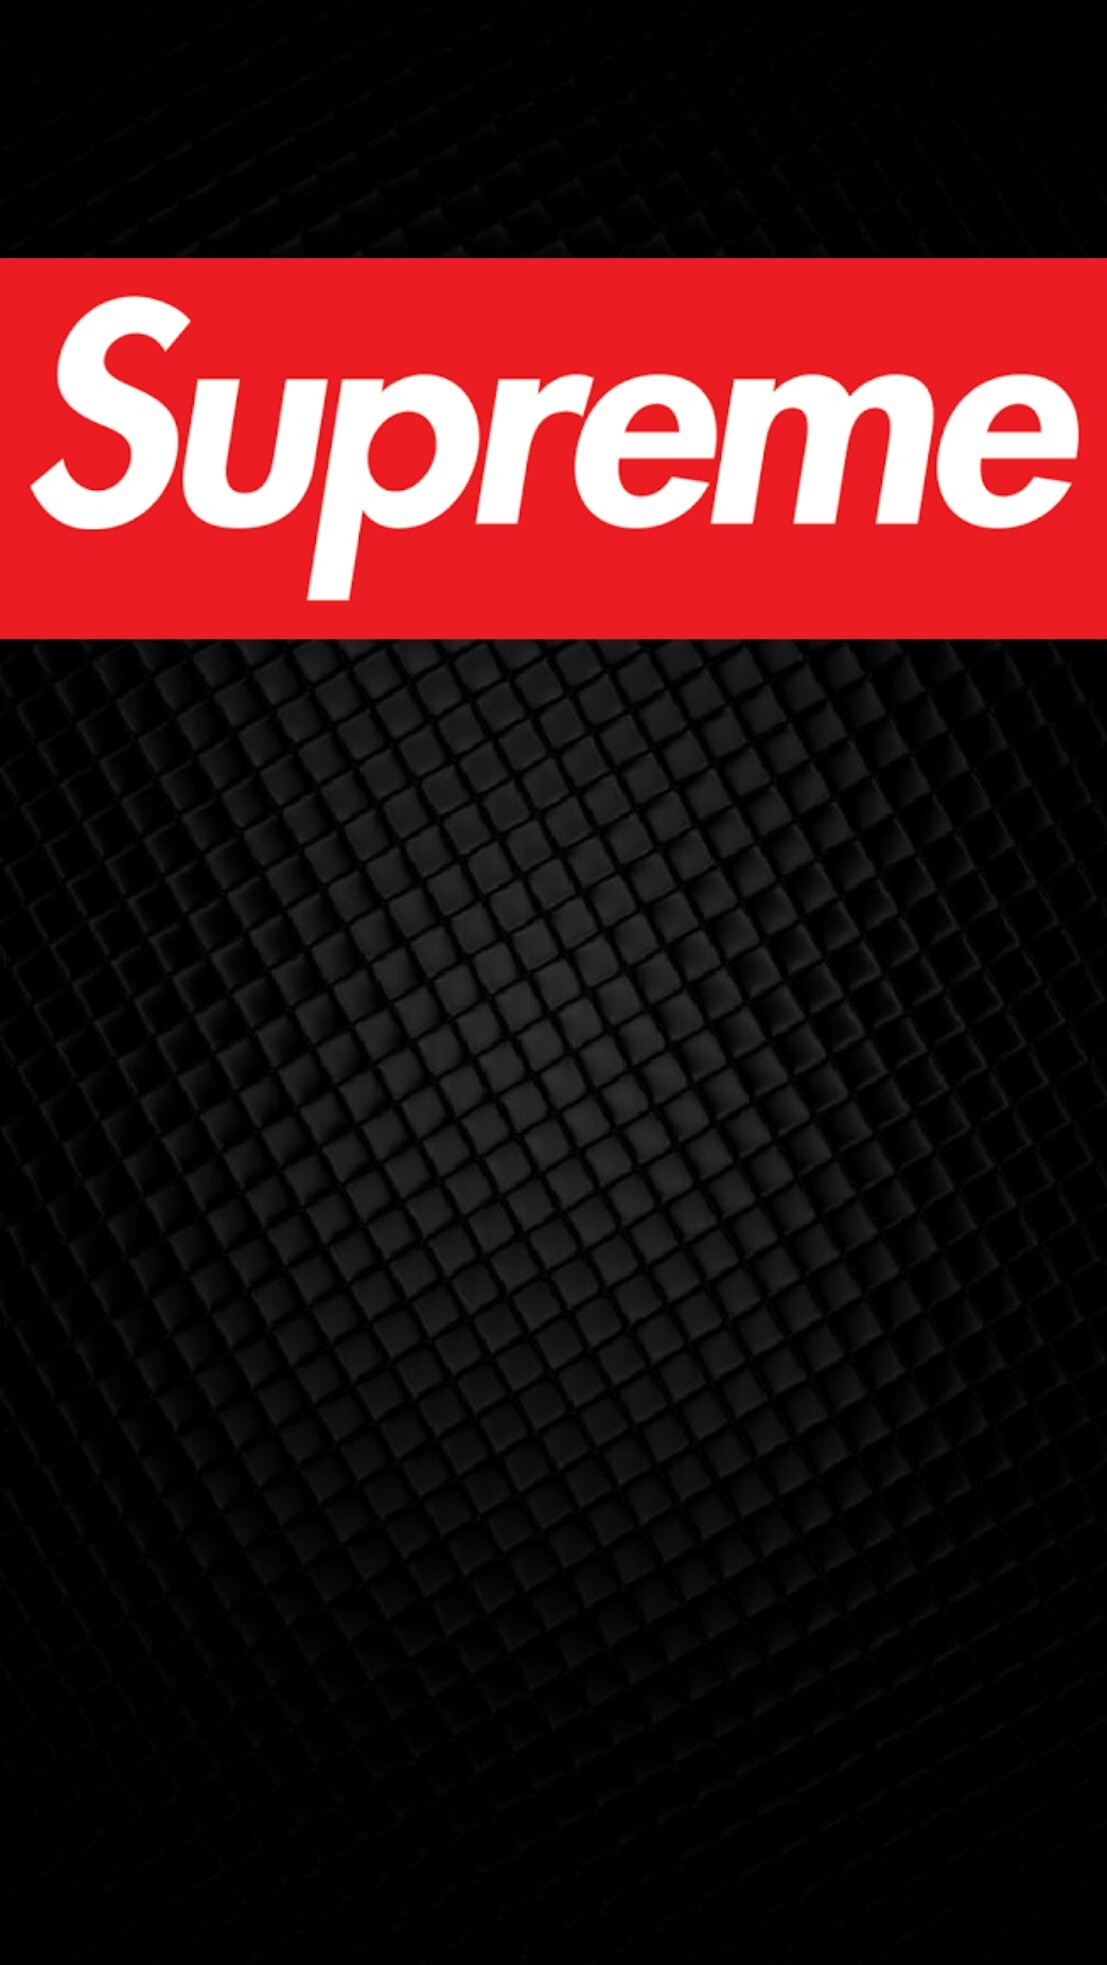 100 Wallpaper Iphone 6s Supreme Hinhanhsieudep Net